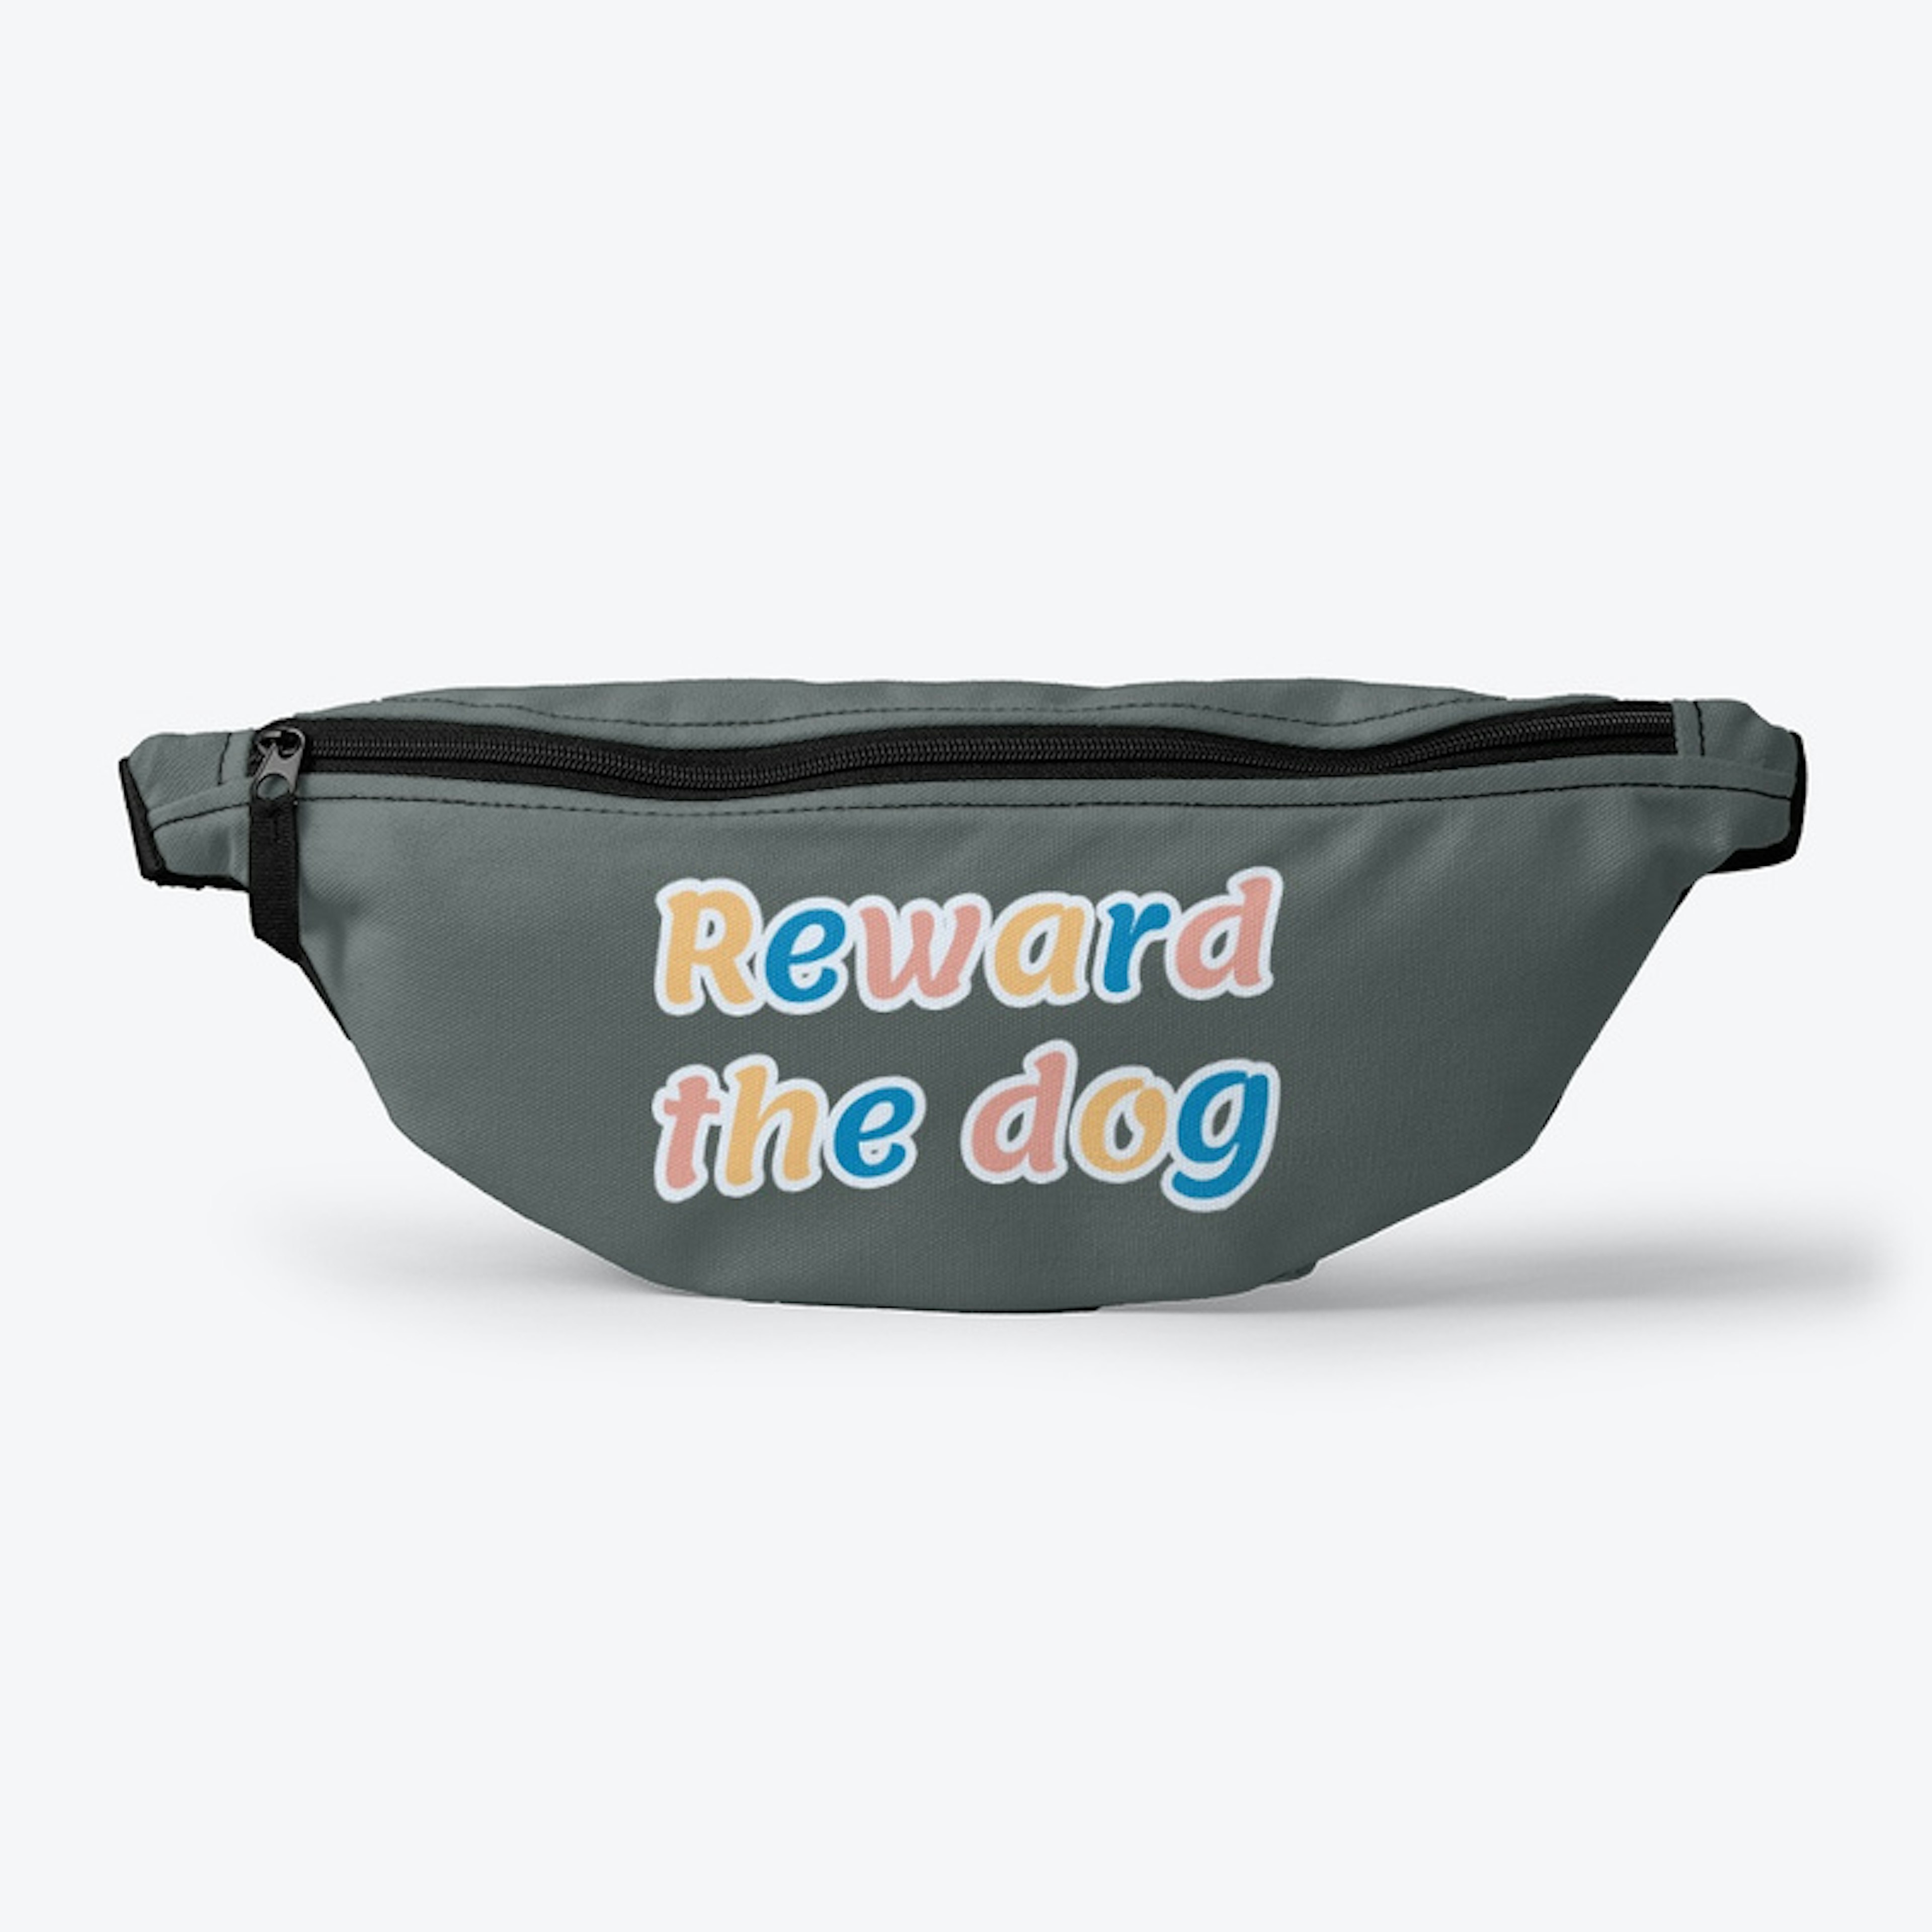 Reward the dog